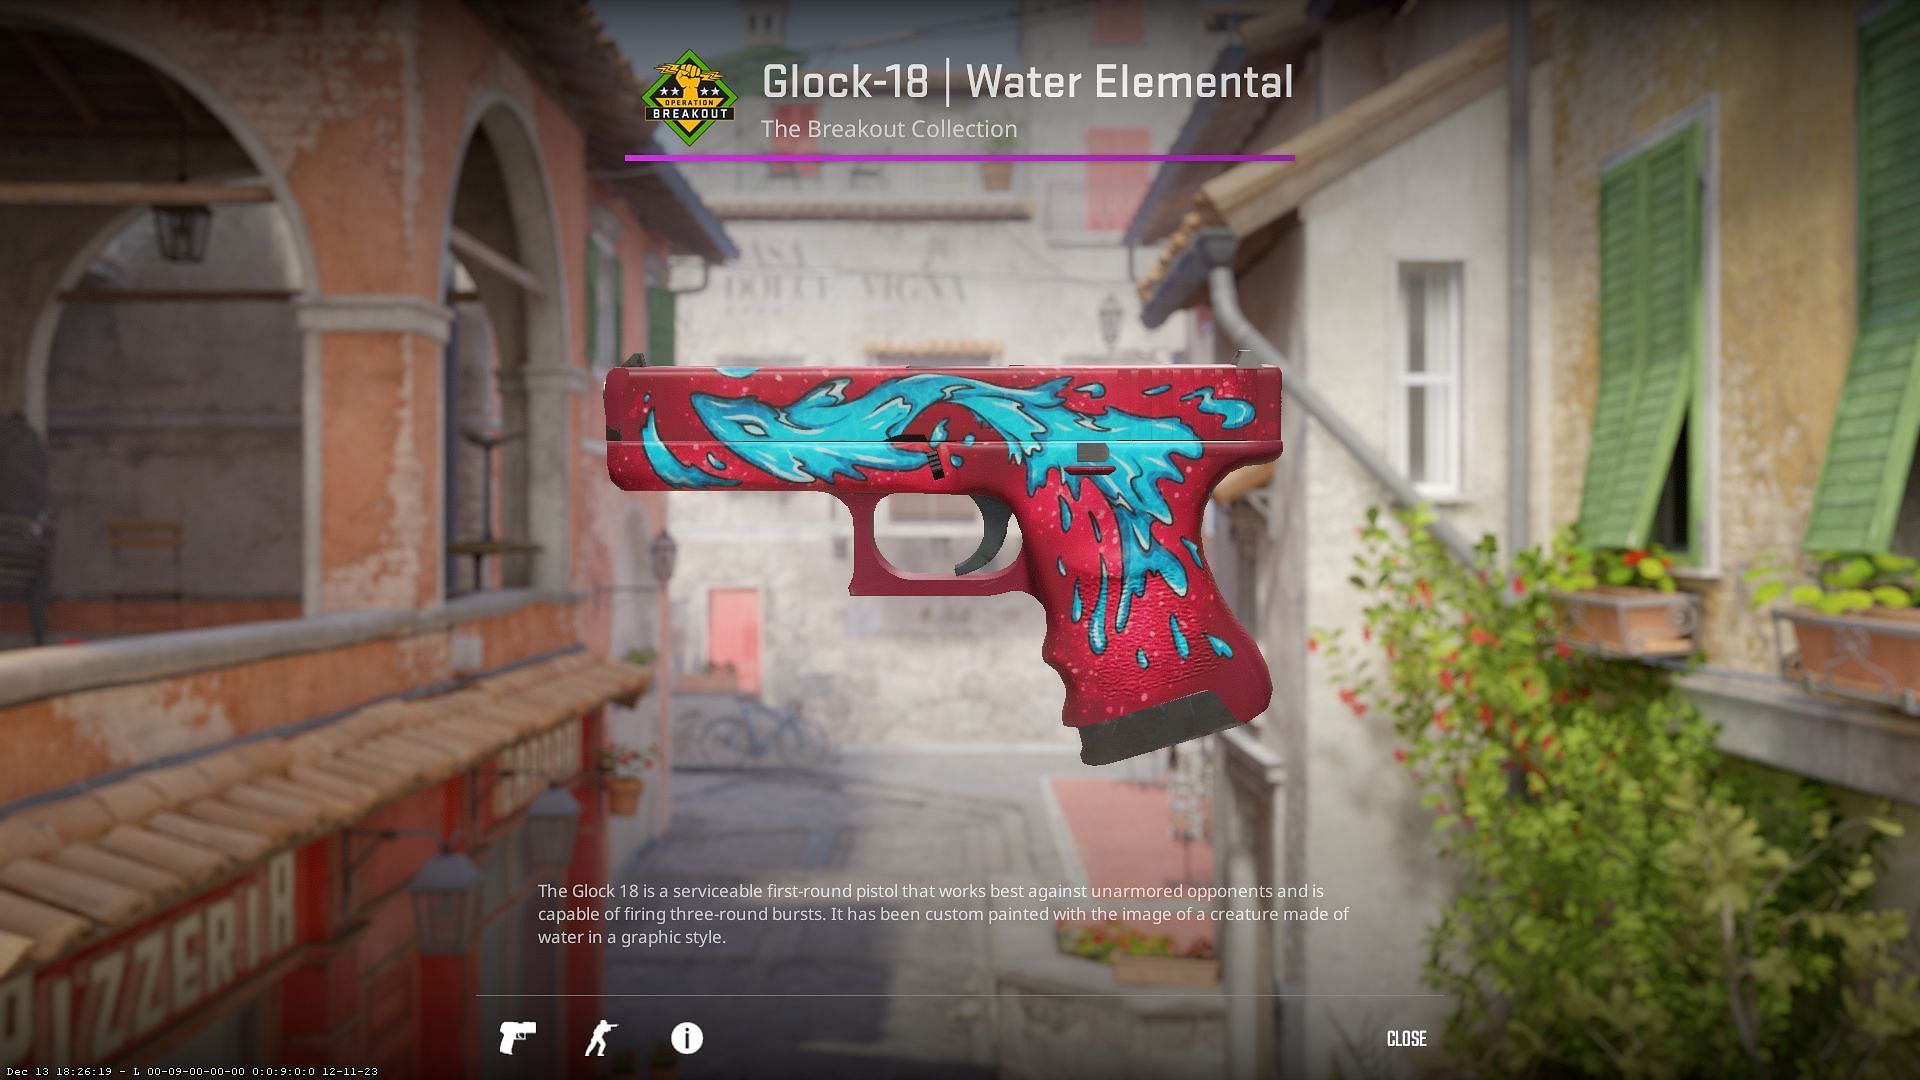 Glock-18 Water Elemental (Image via Valve)